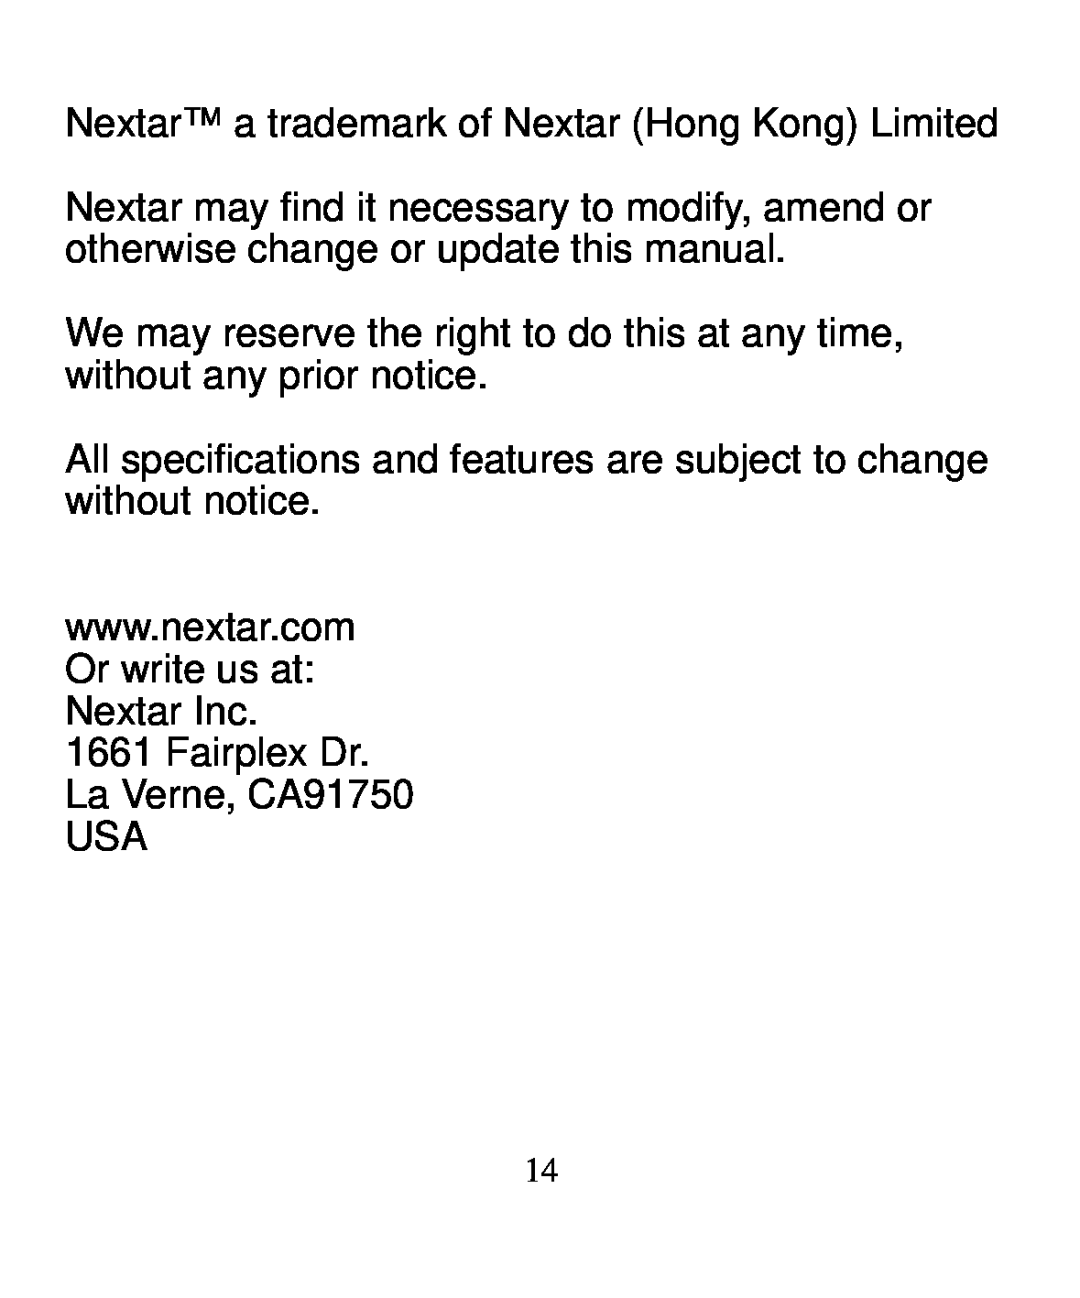 Nextar N3-502 user manual Nextar a trademark of Nextar Hong Kong Limited, Fairplex Dr. La Verne, CA91750 USA 